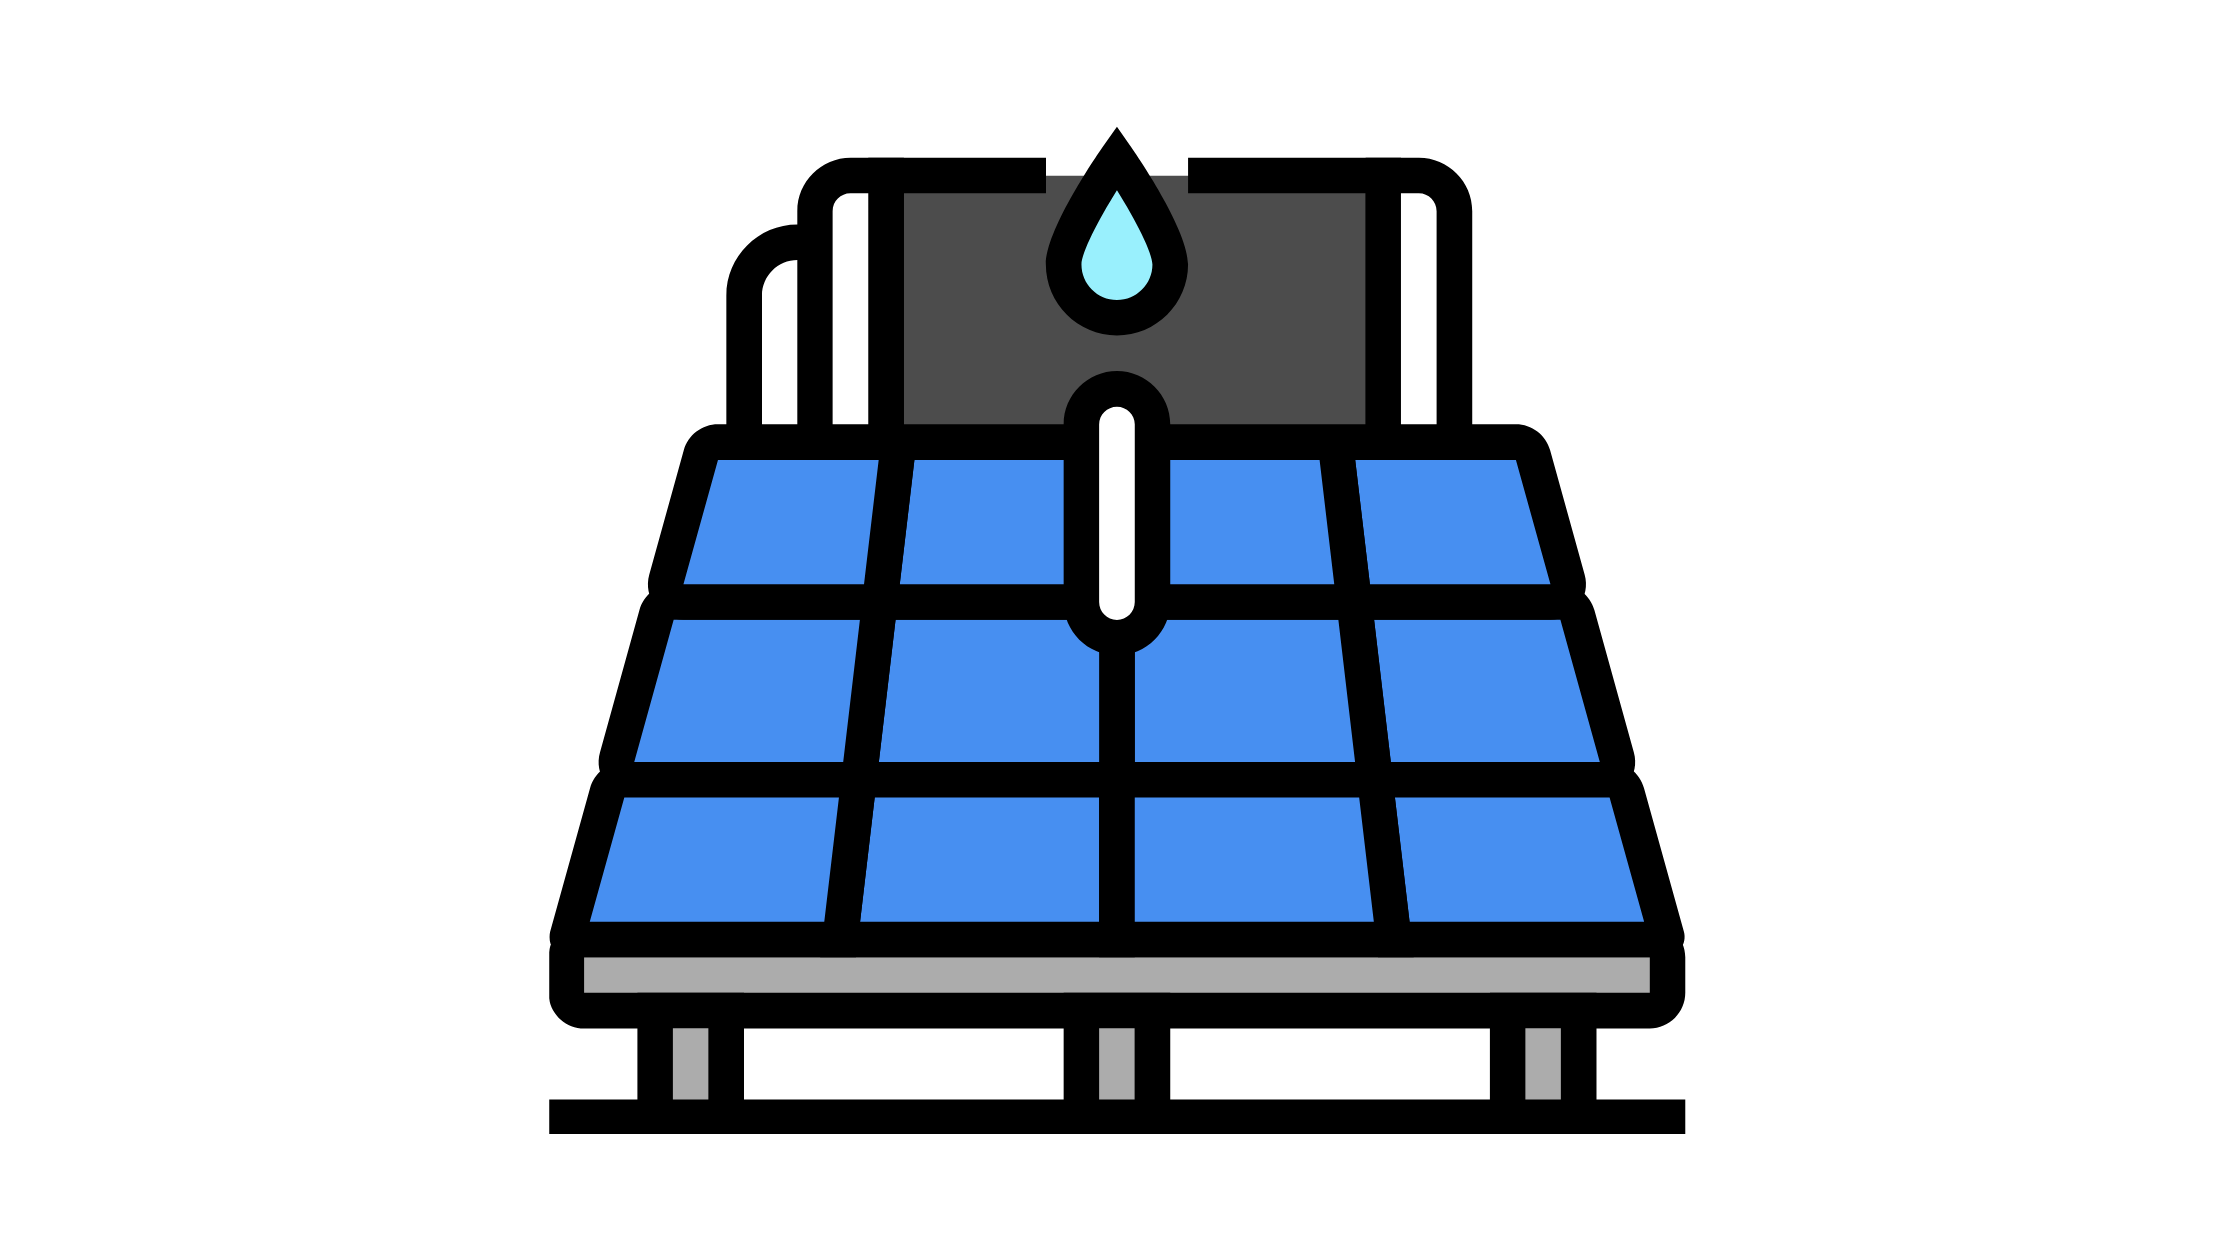 solar-water-heater